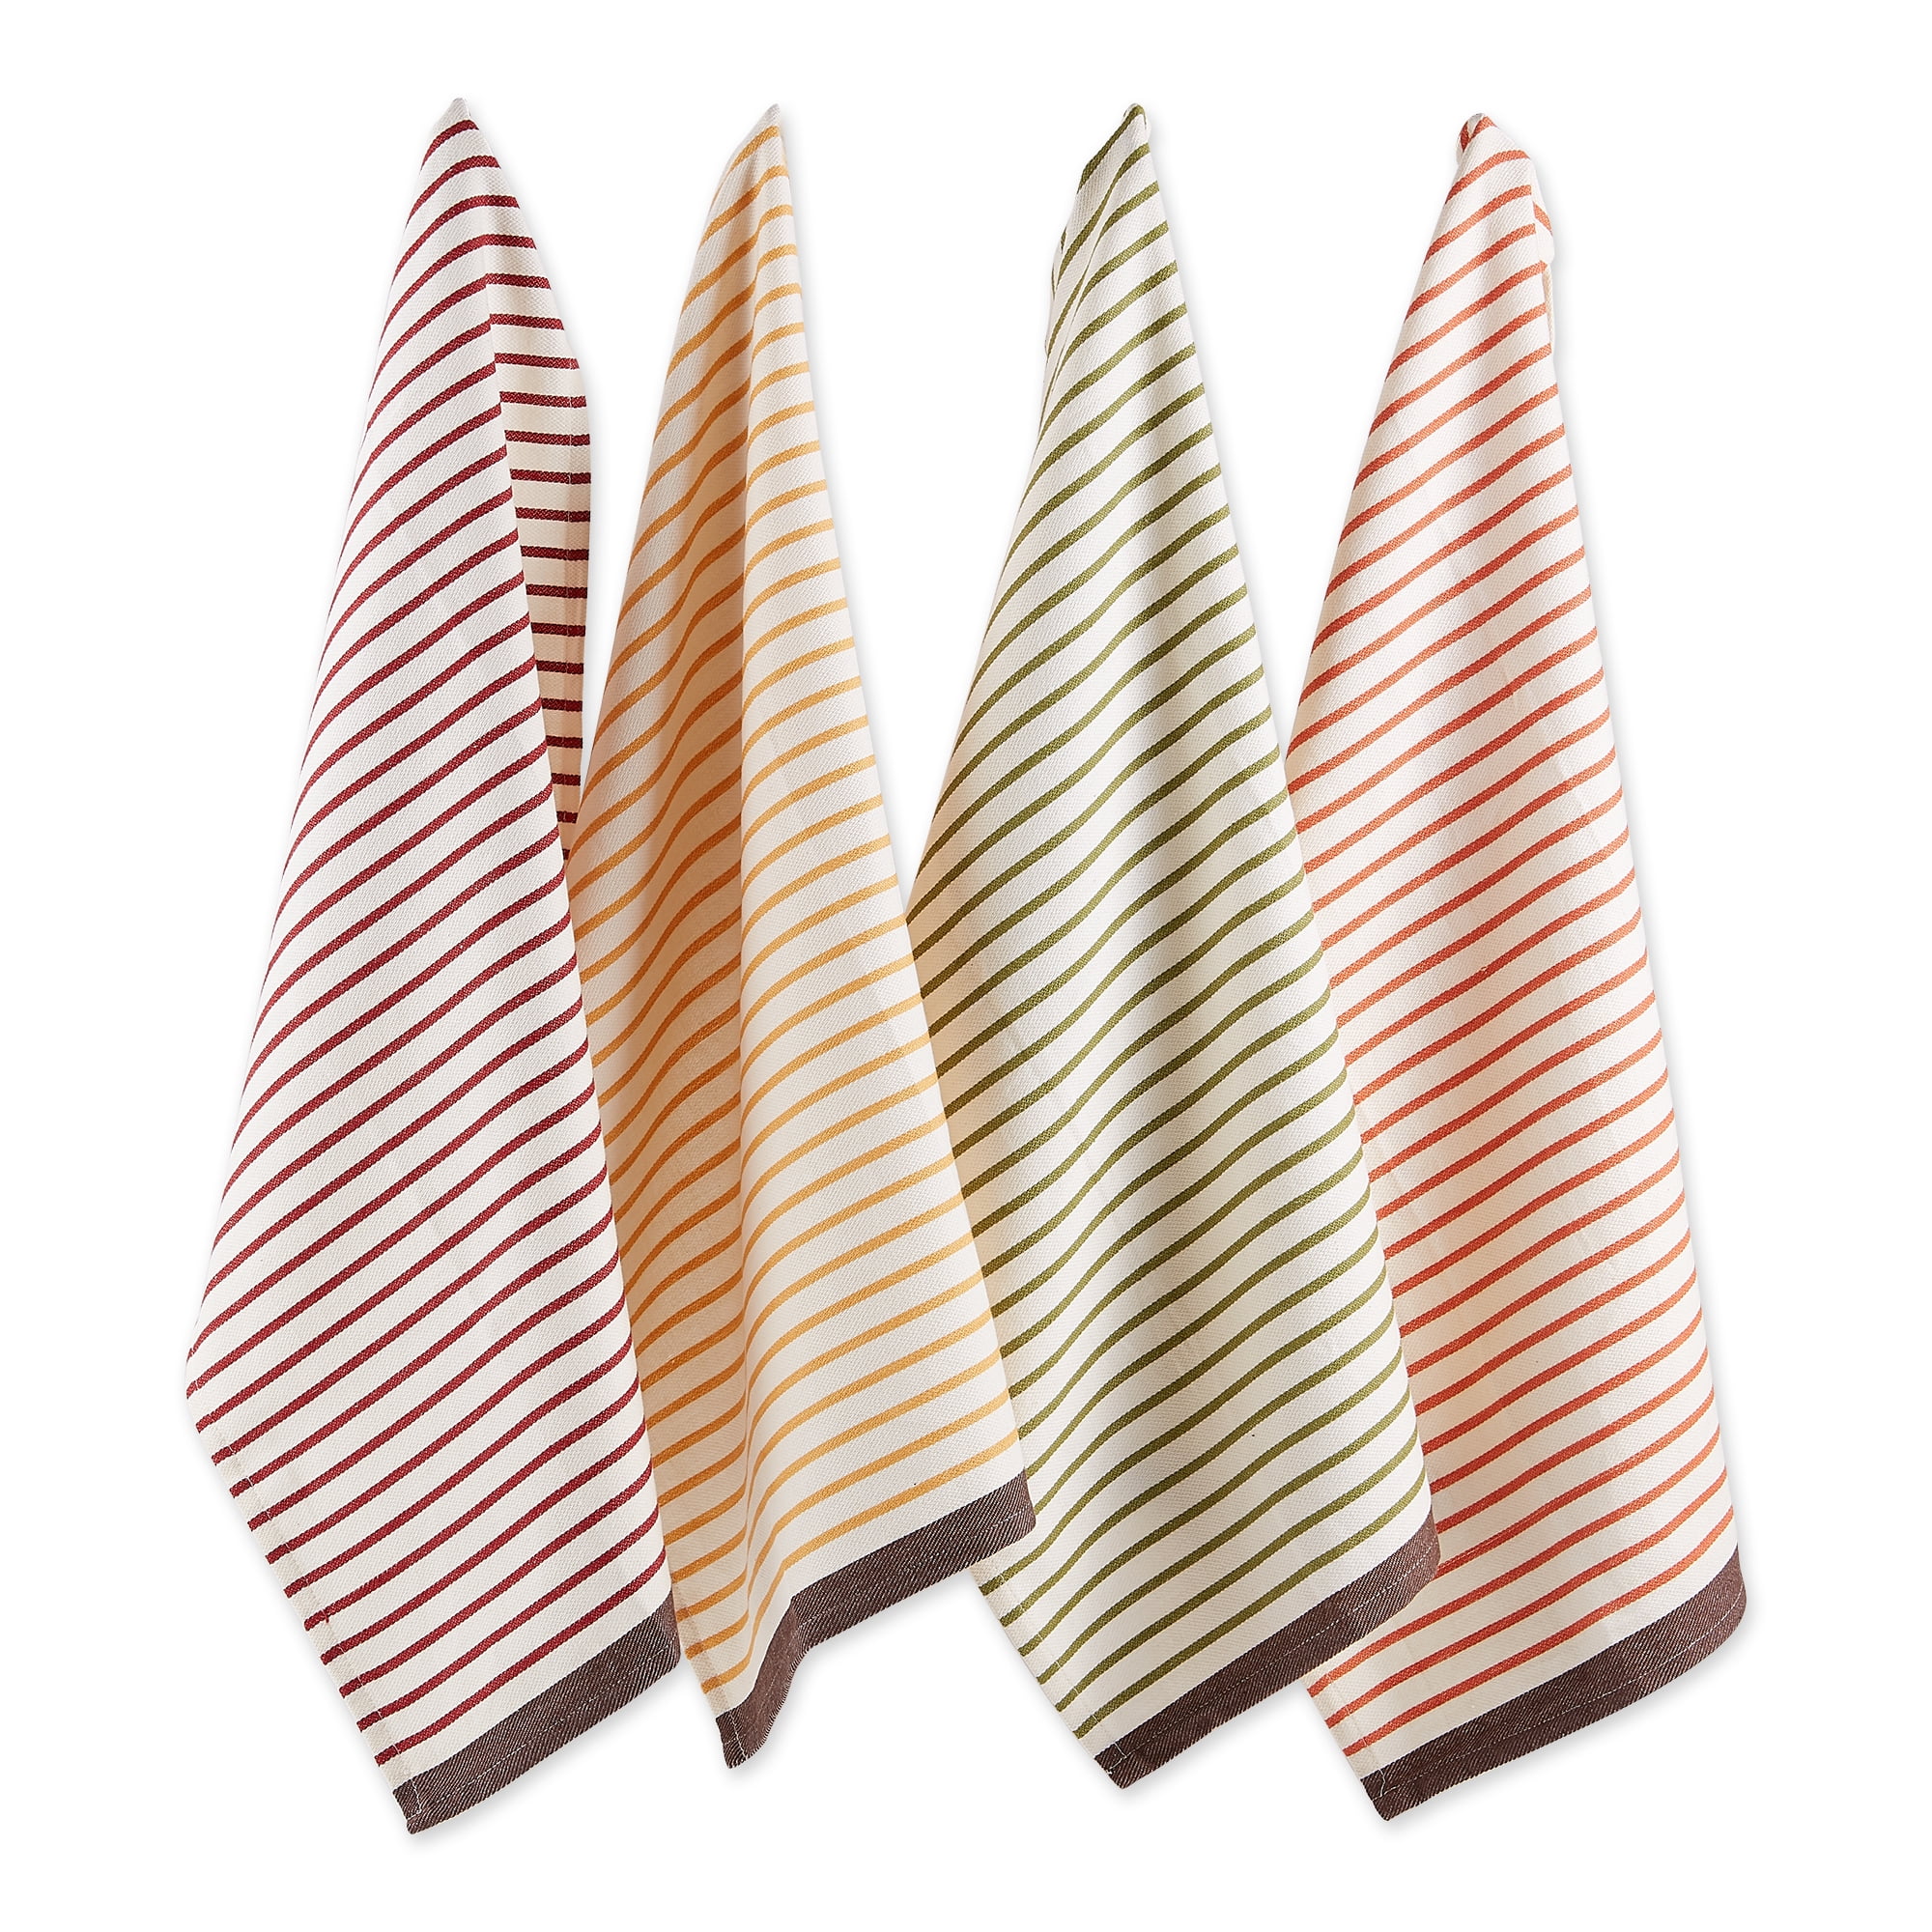 Design Imports Camz10181 Harvest Prep Stripe Woven Dish Towel Set - Set Of 4